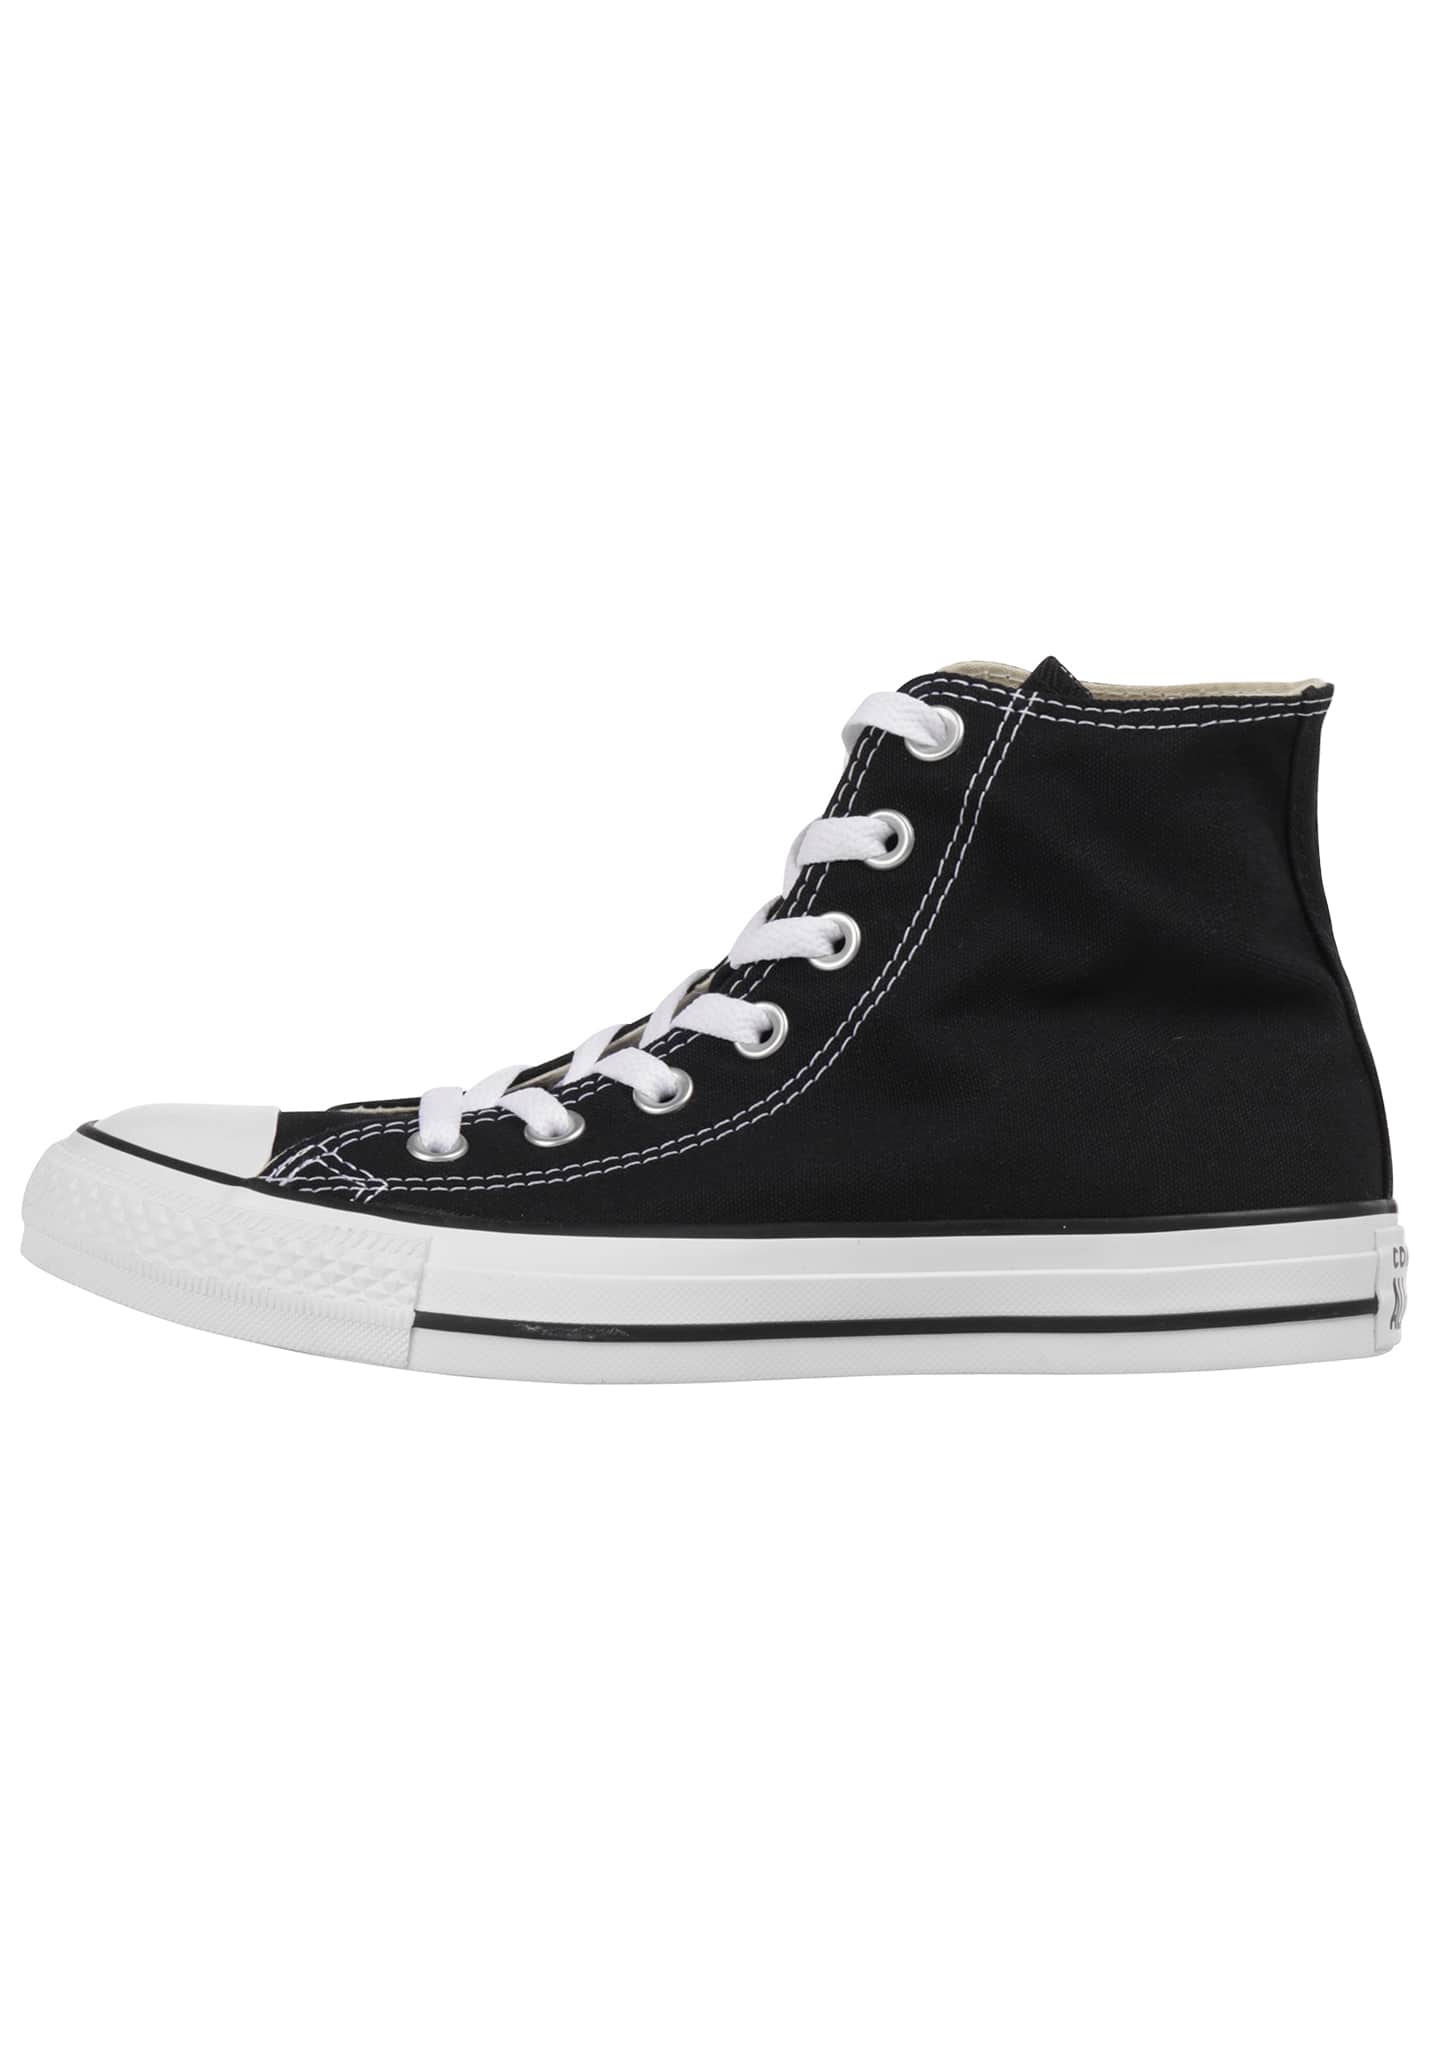 Converse Chuck Taylor All Star Hi Sneaker black + white 45